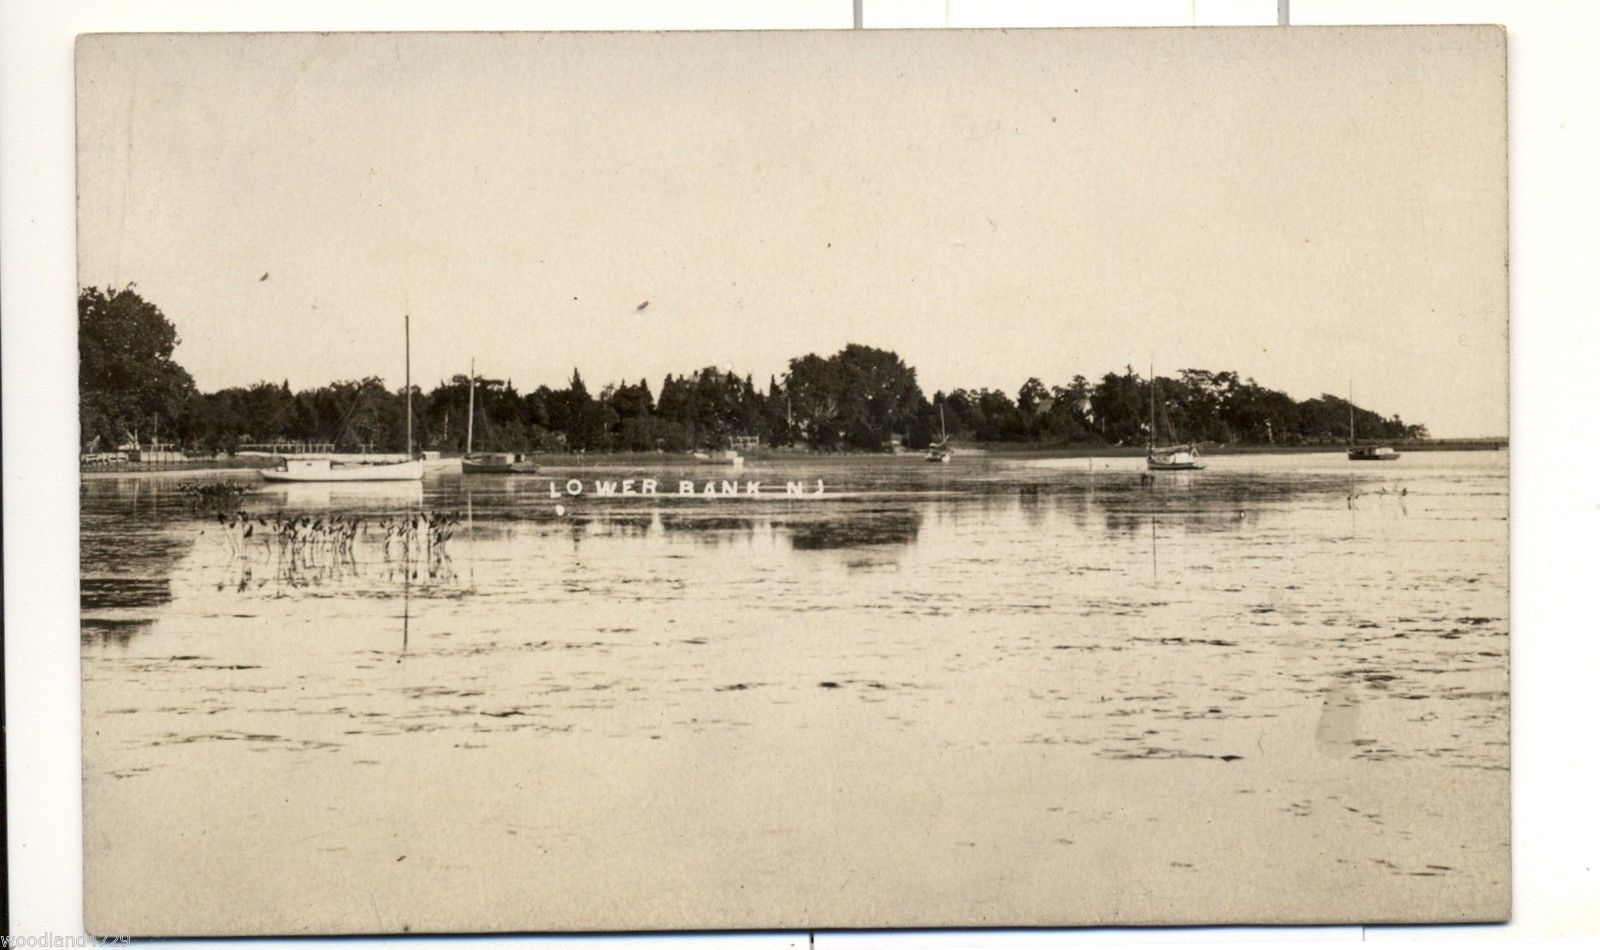 Lower Bank - Shorefront - c 1910